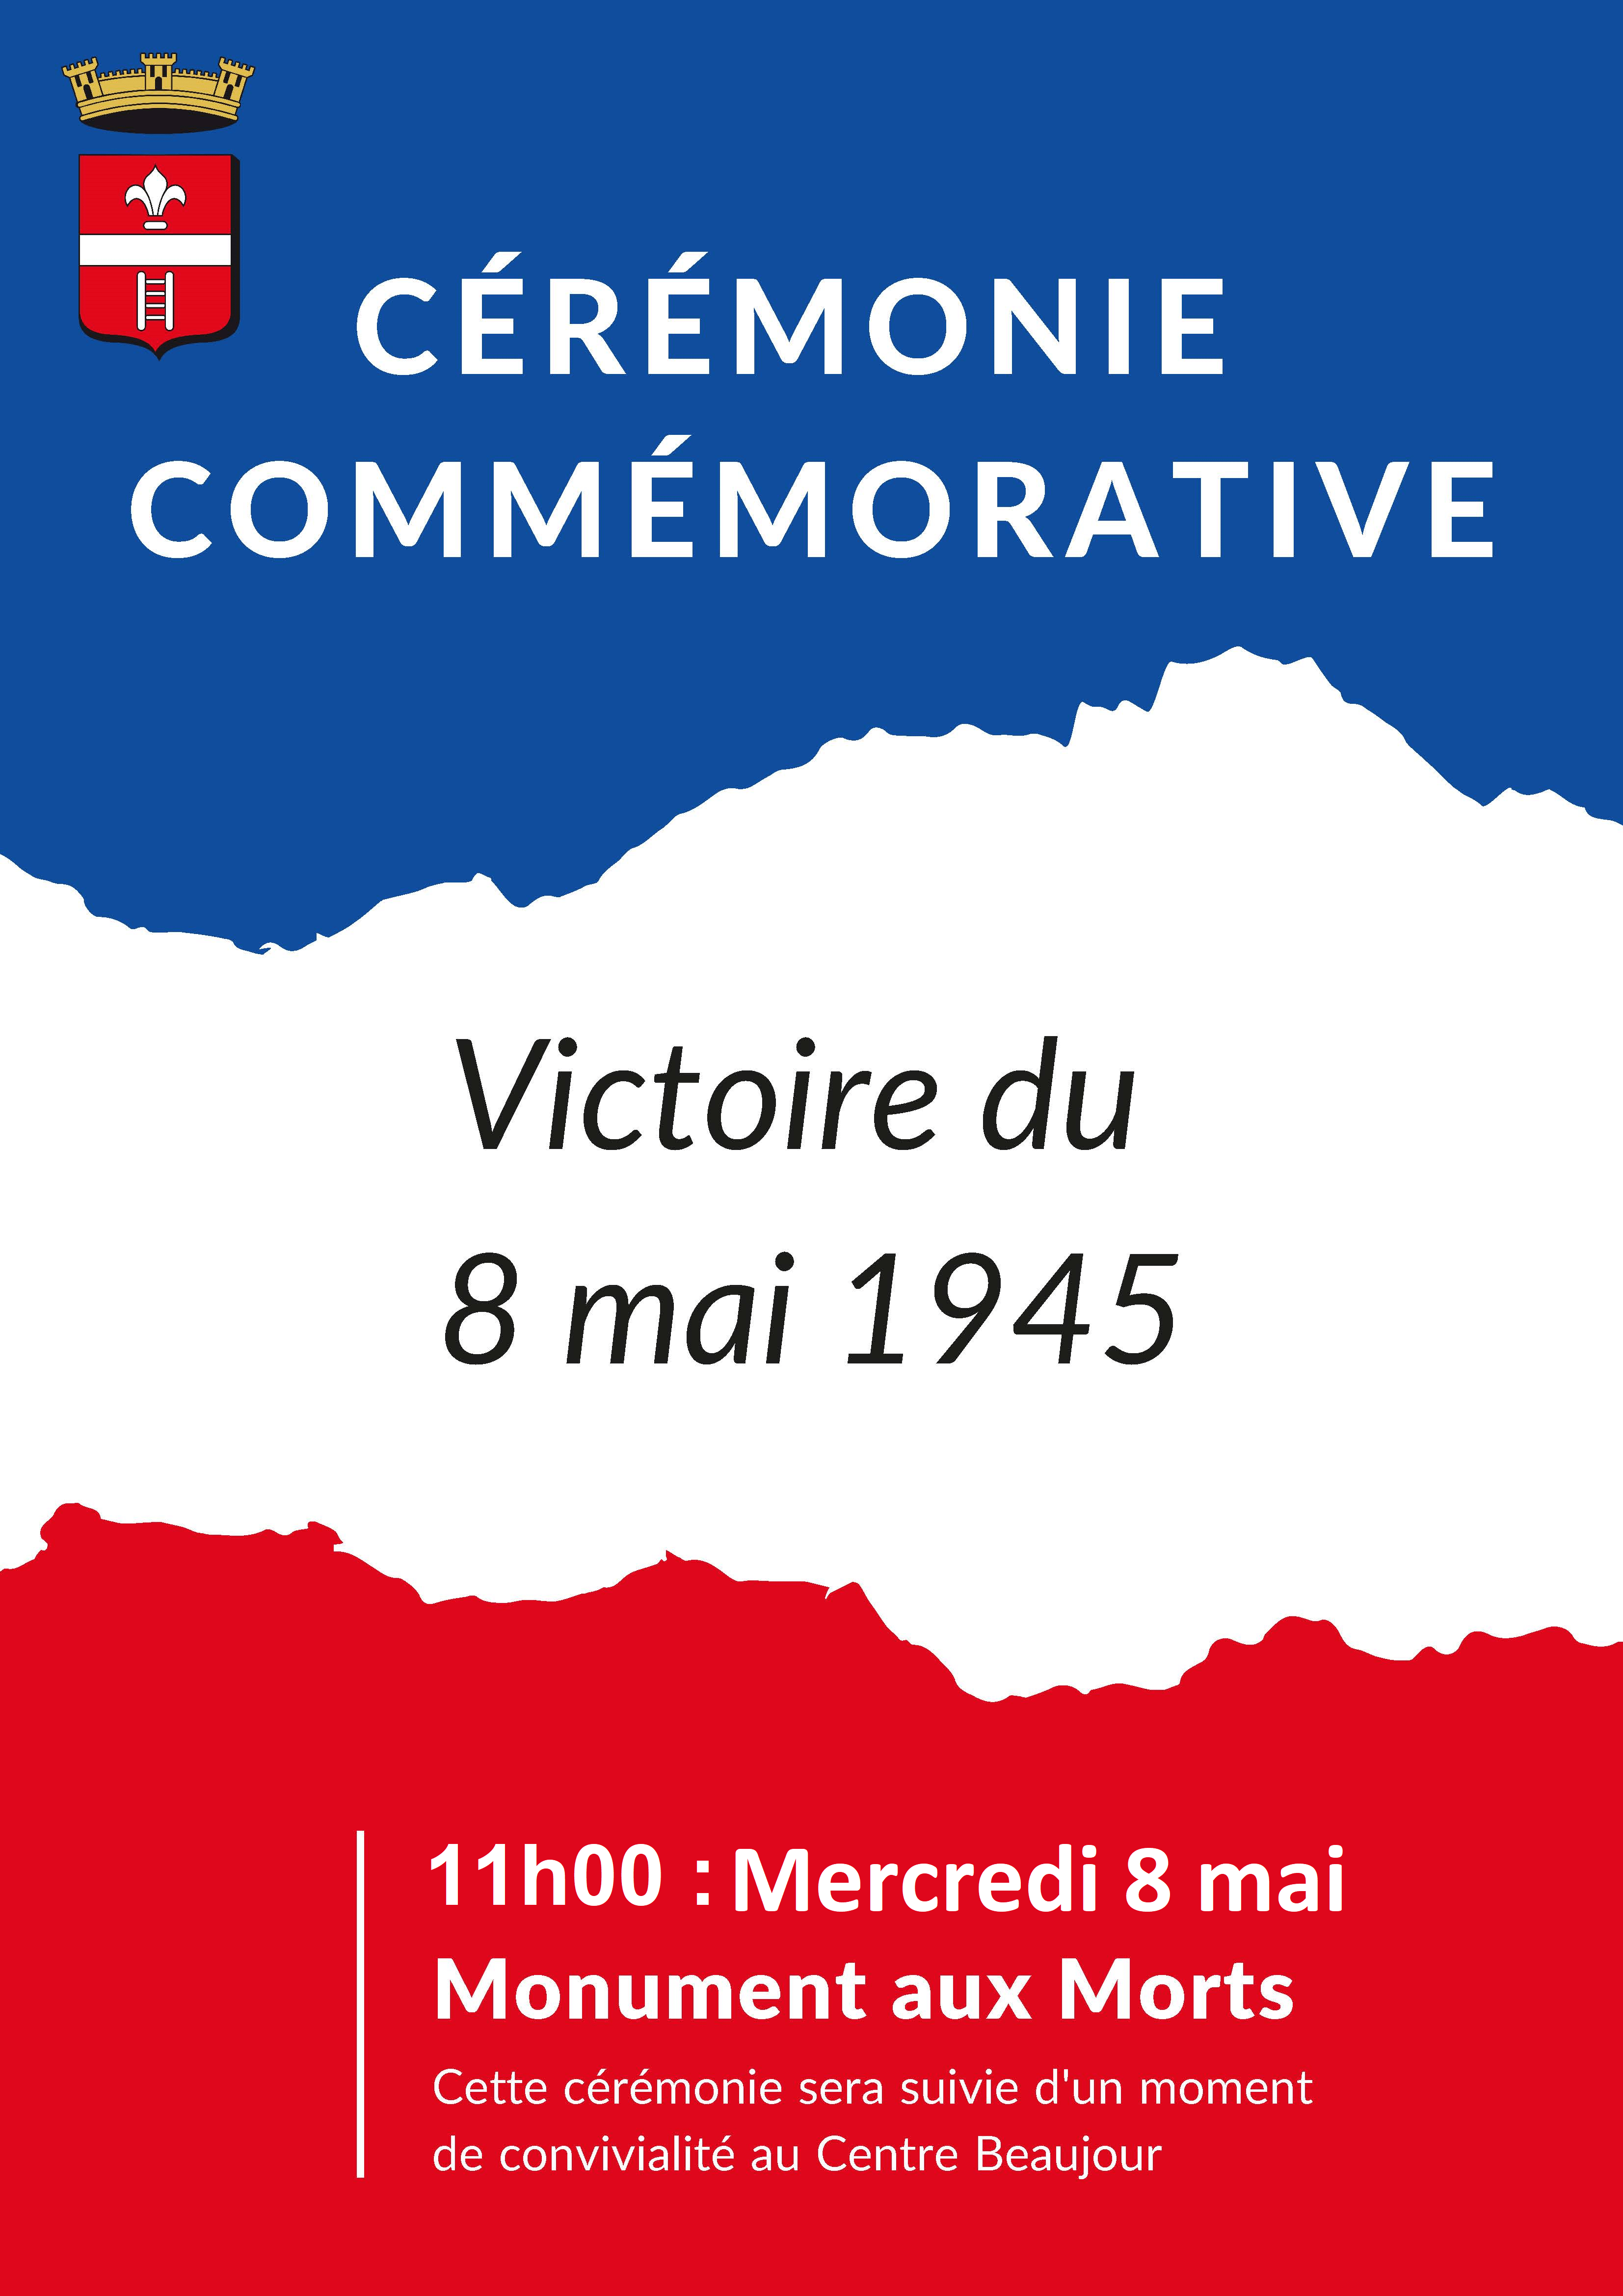 Cérémonie Commémorative du 8 mai 1945